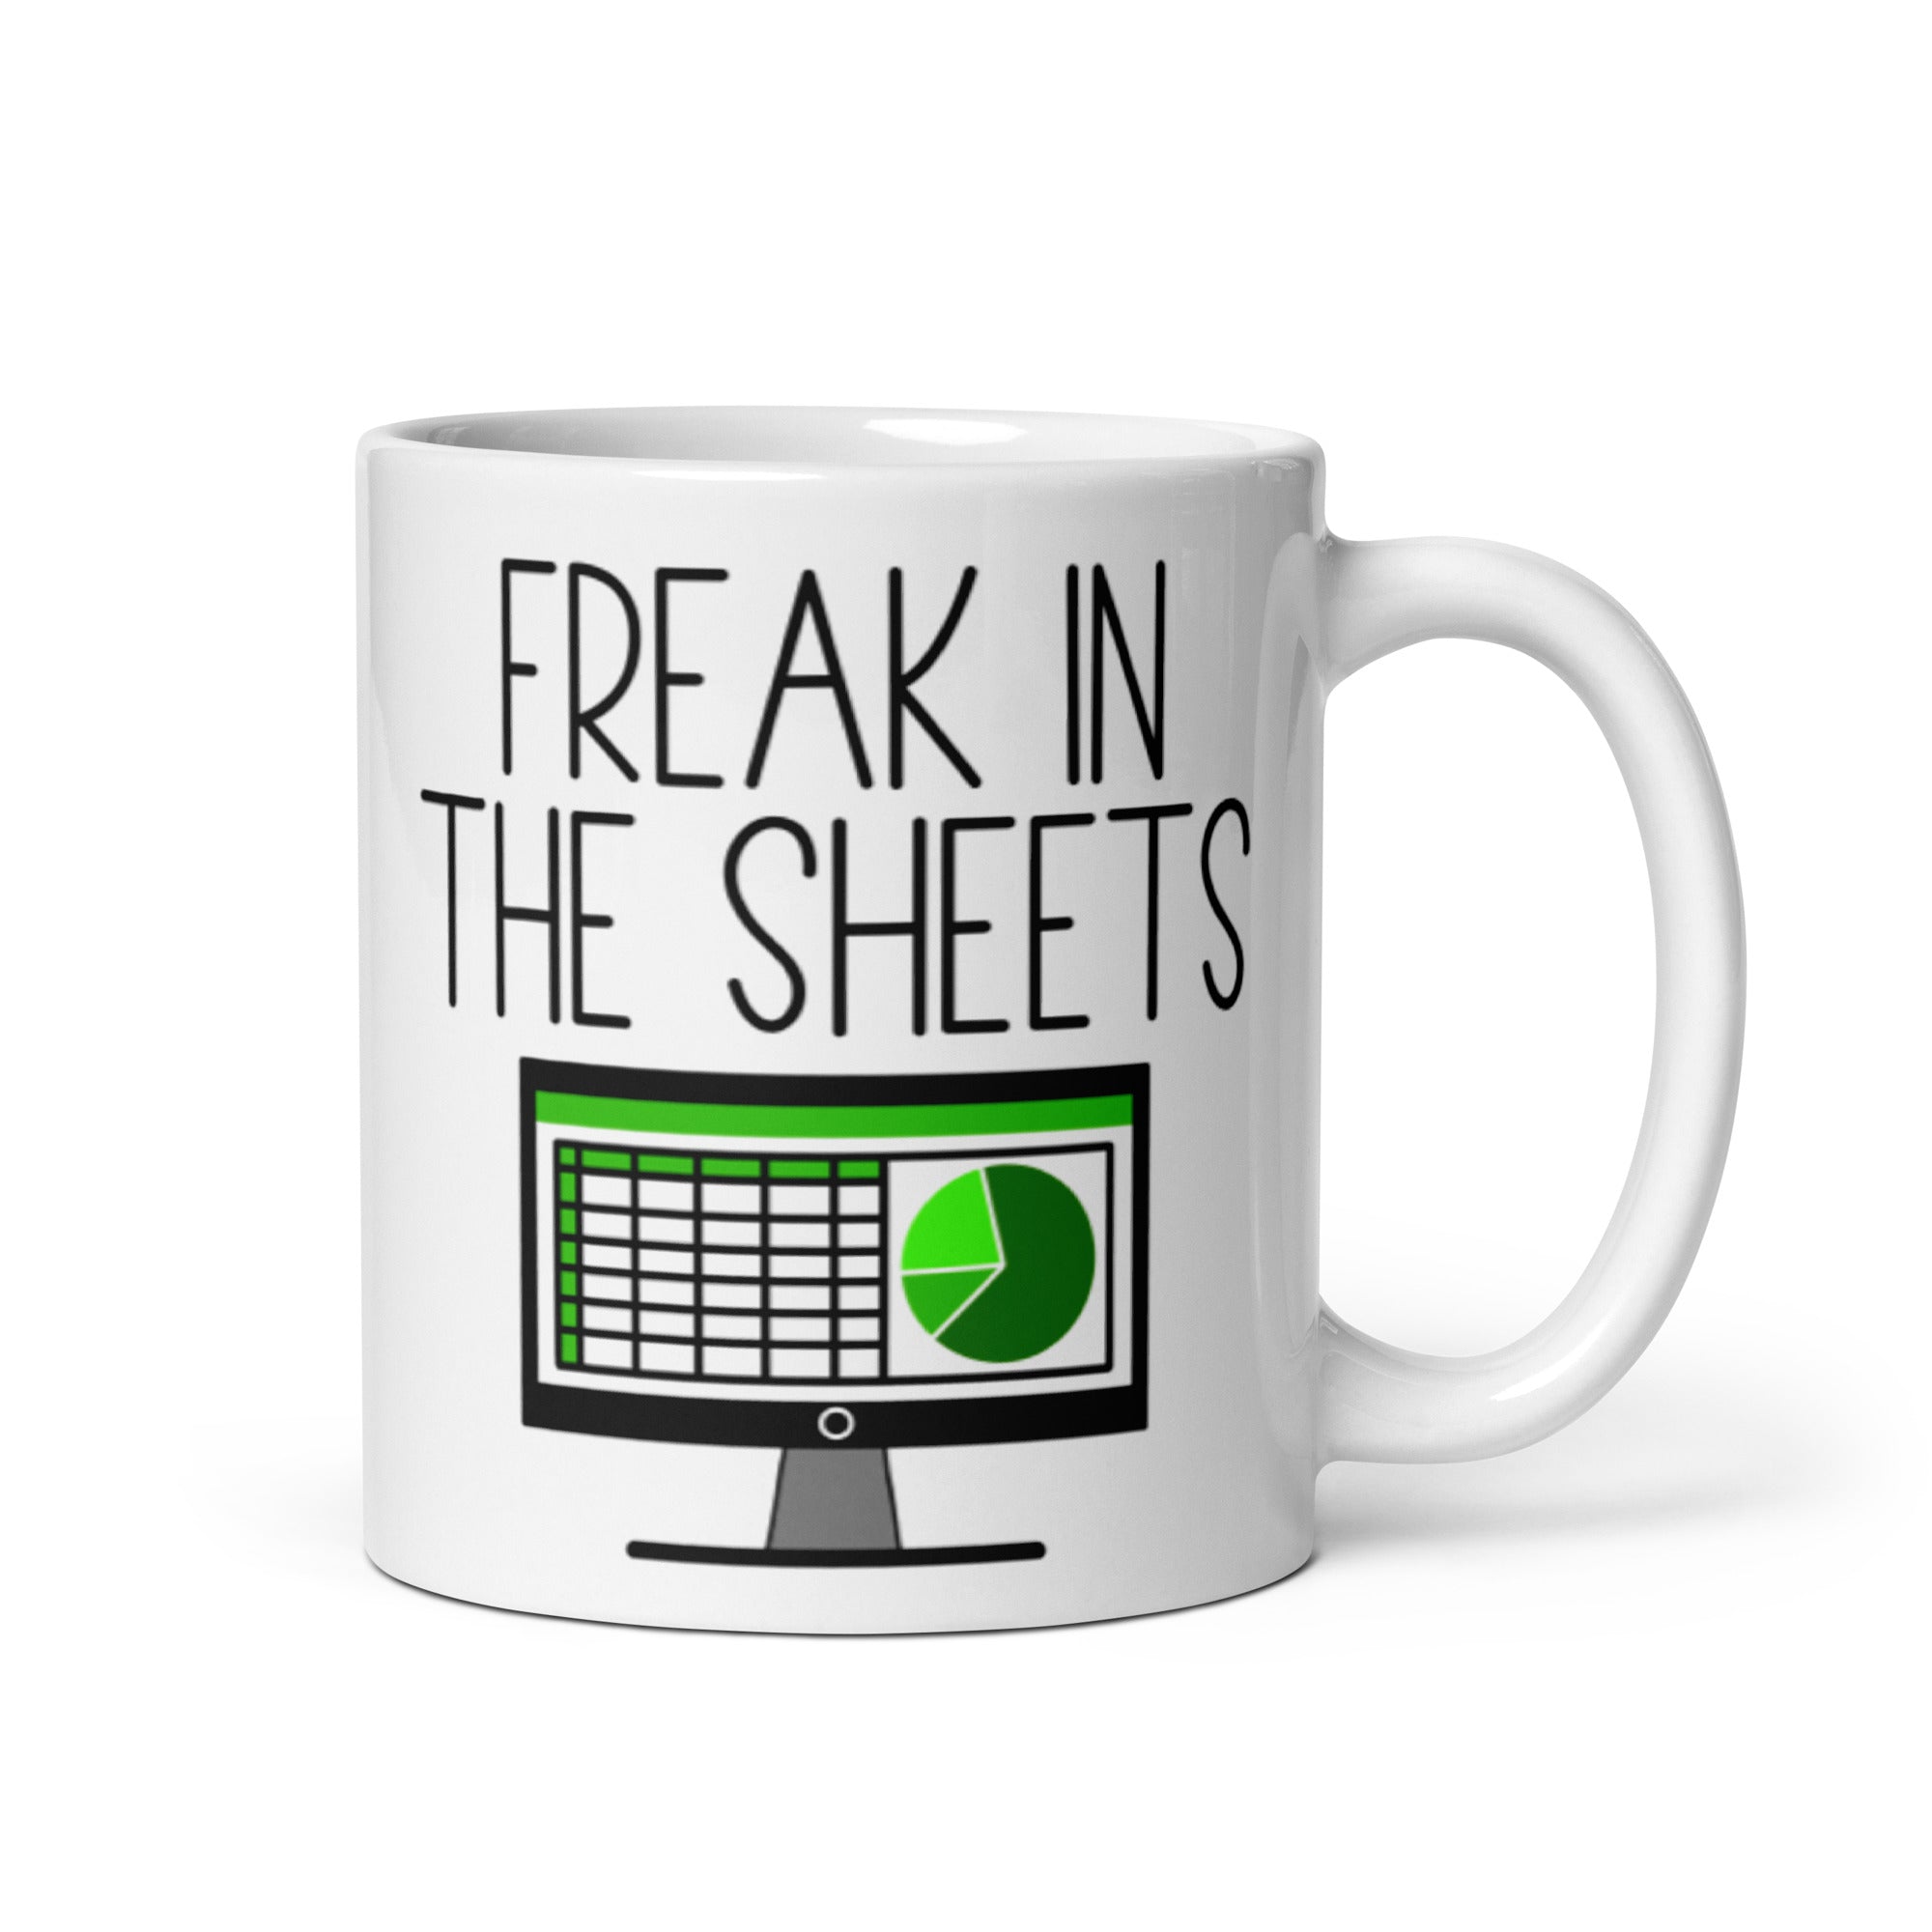 freak-in-the-sheets-mug